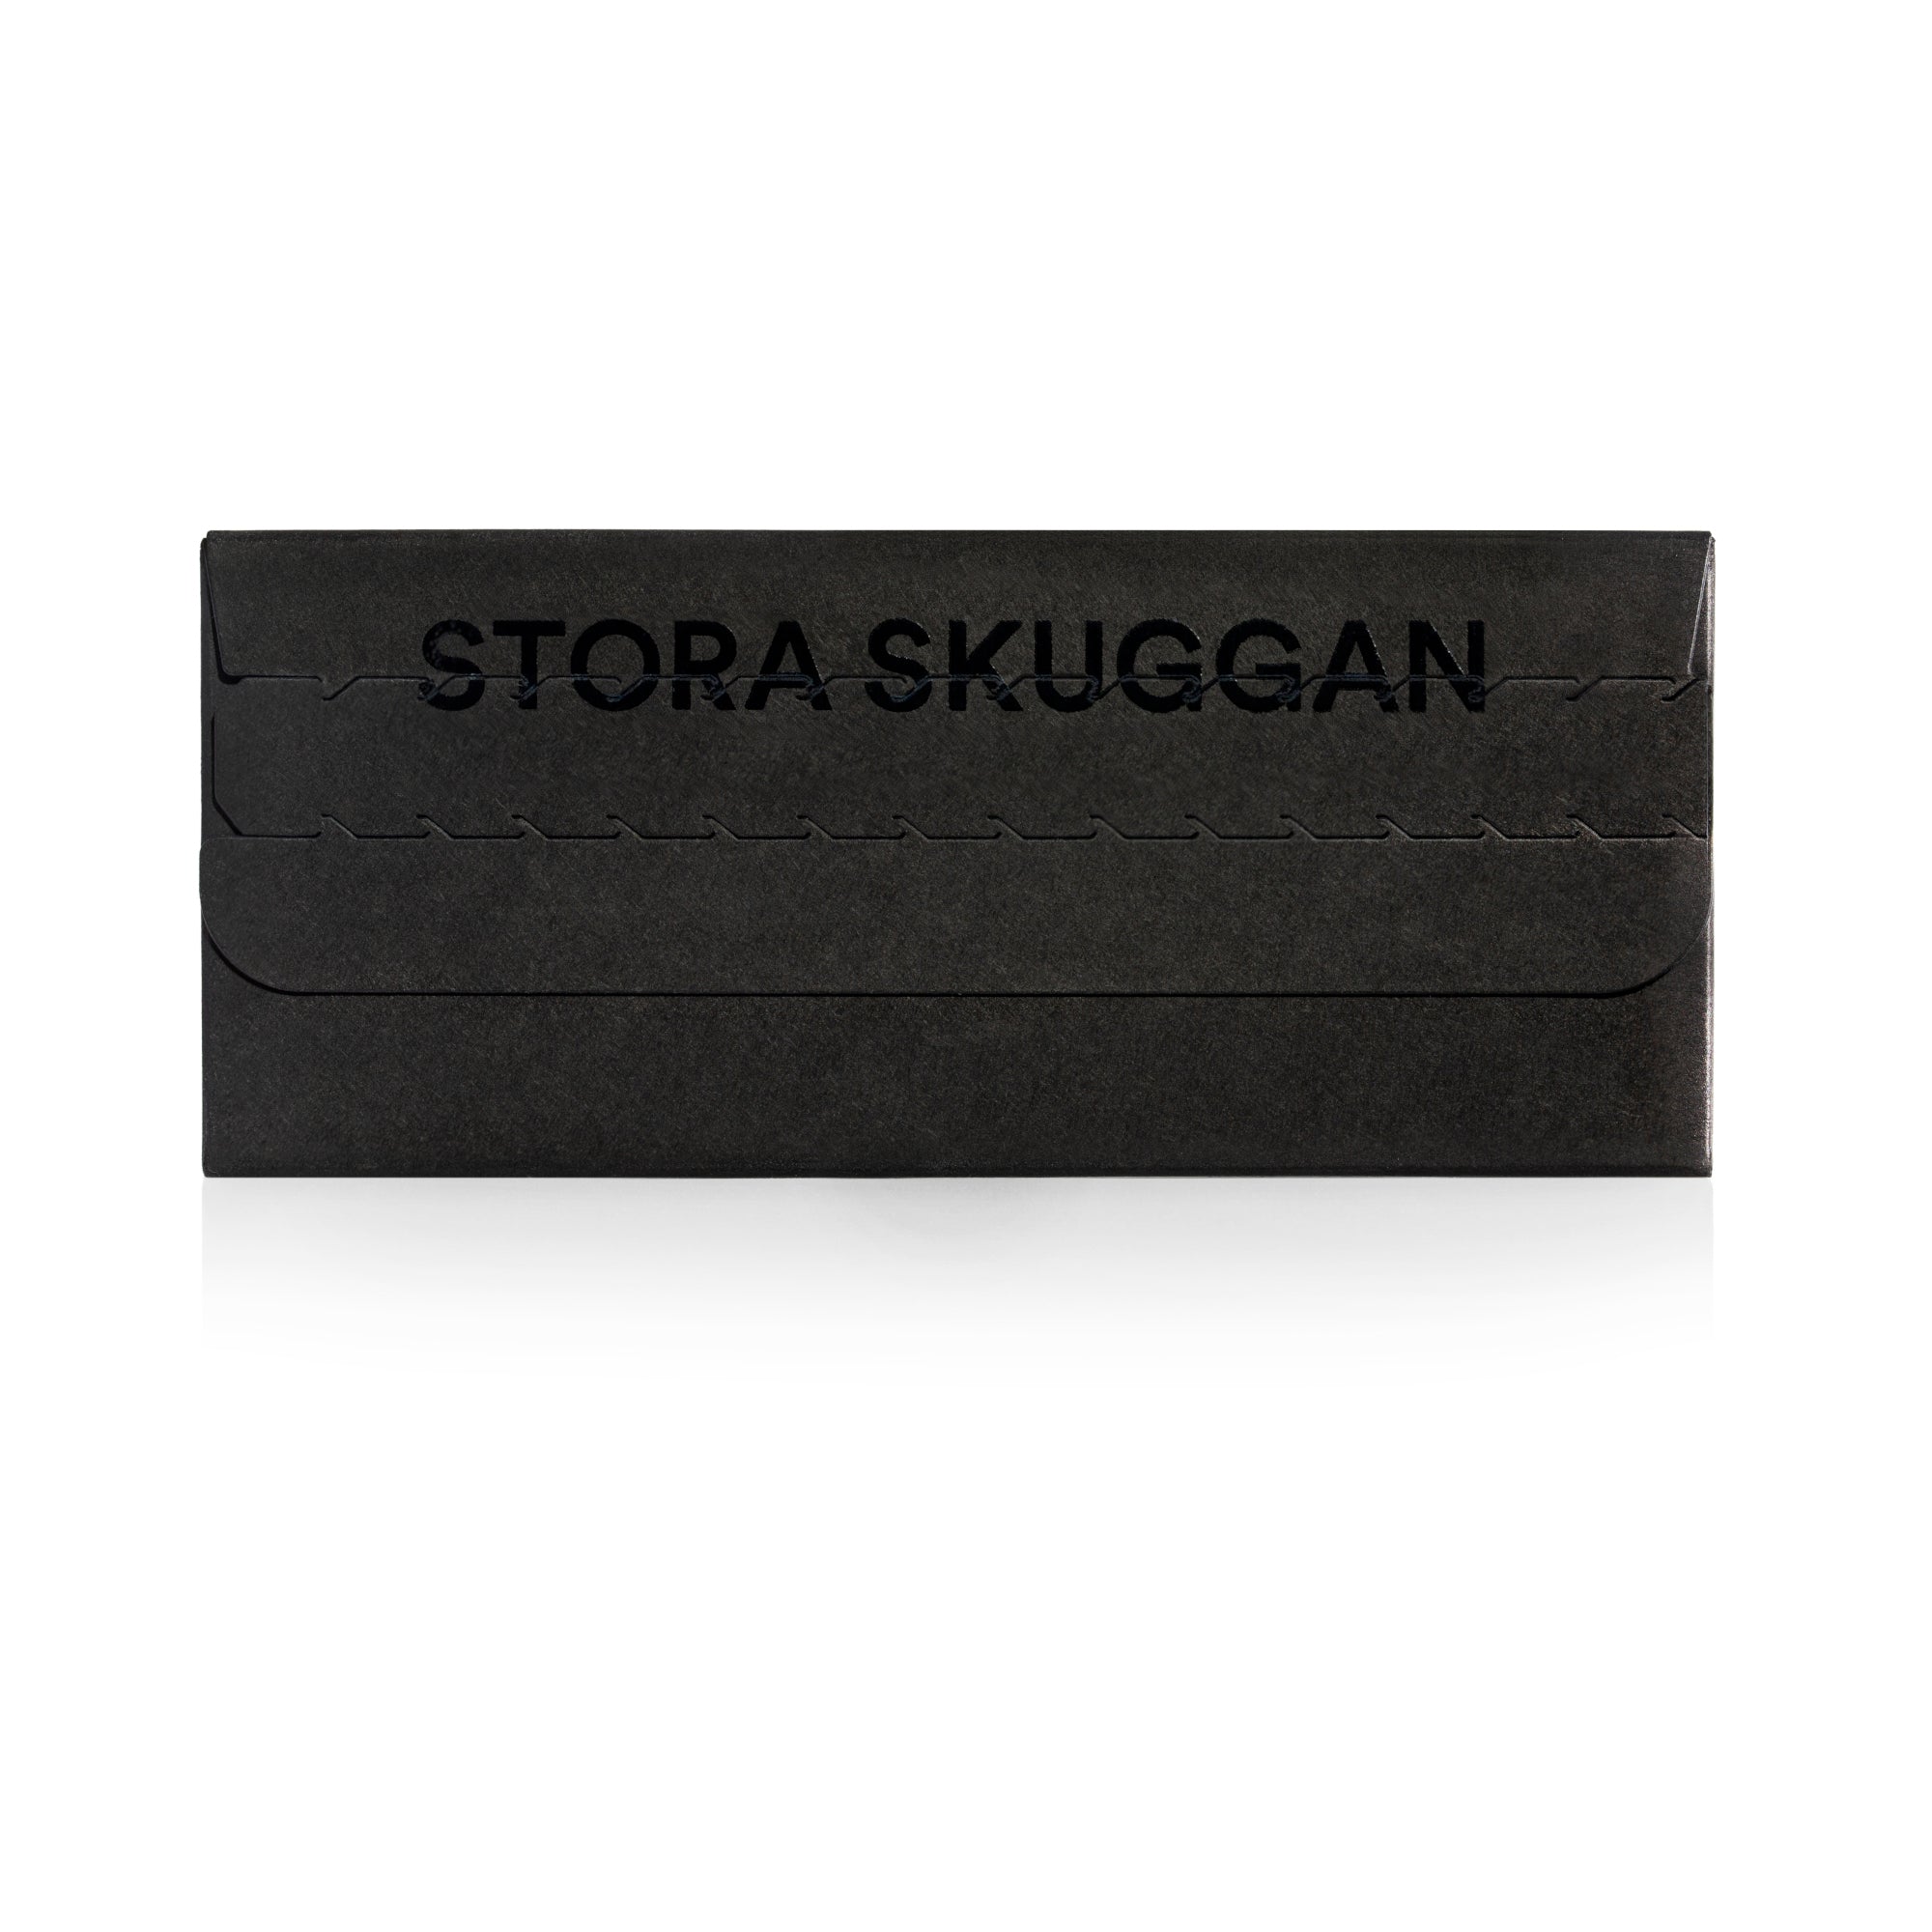 Stora Skuggan Discovery Set